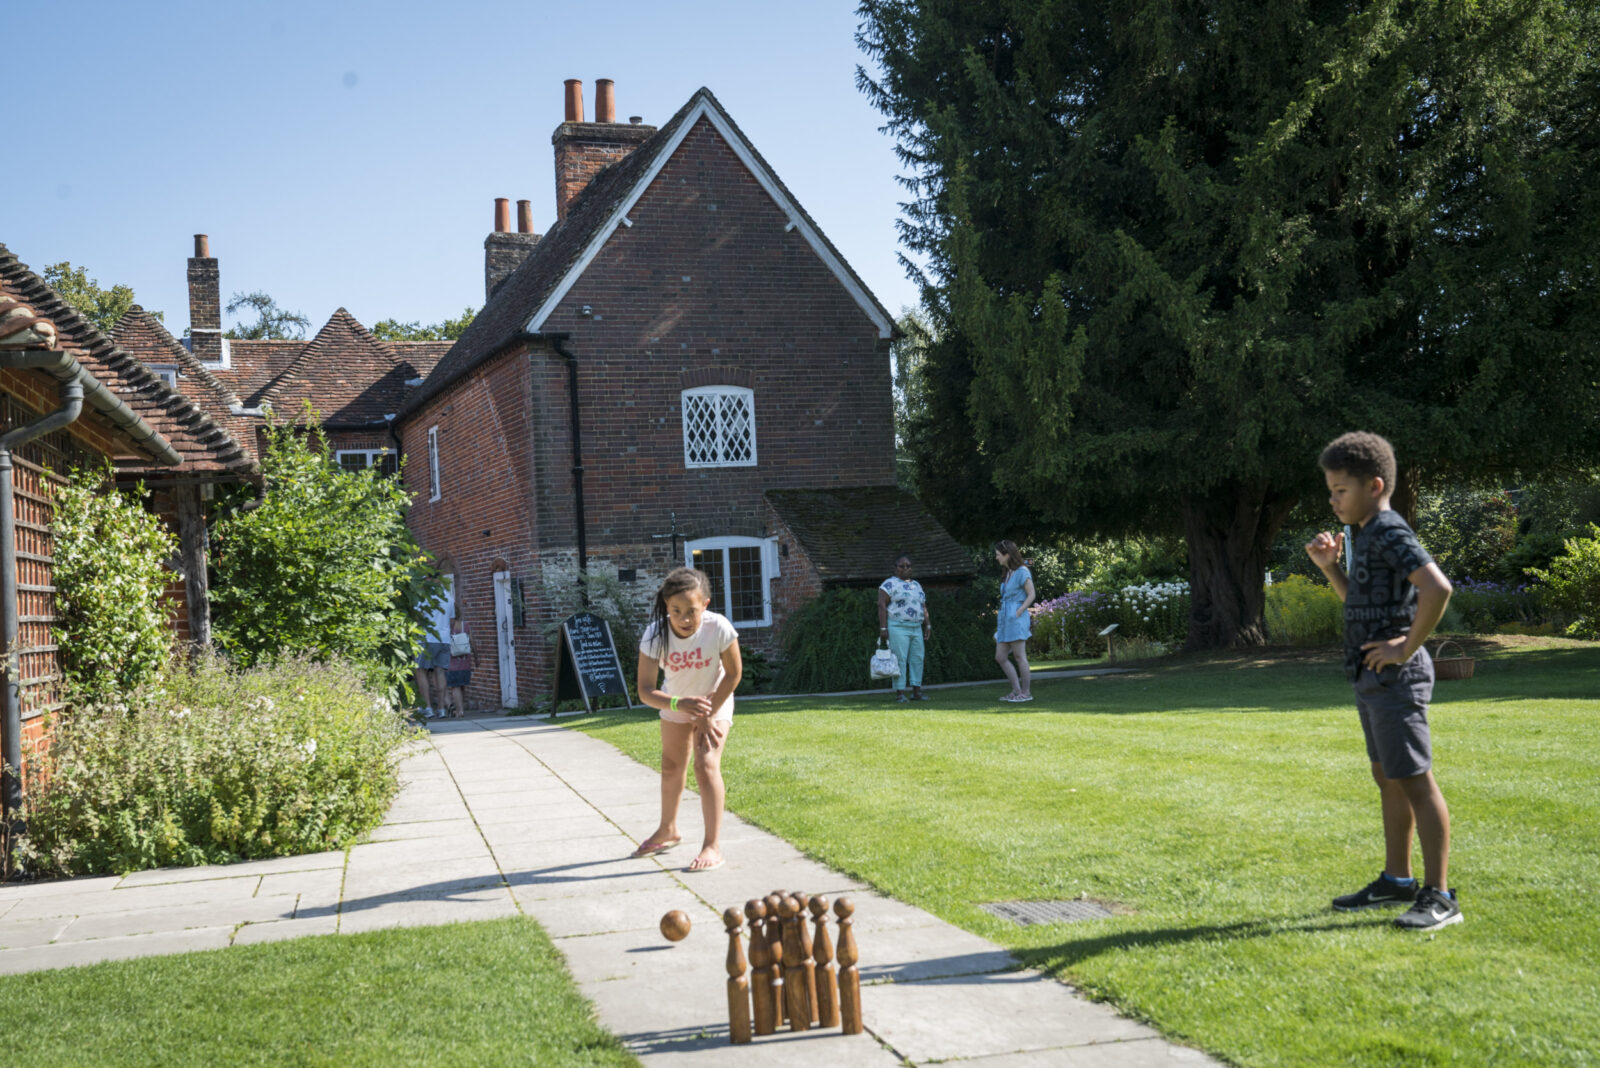 Children playing in the garden of Jane Austen's House. Credit: Rob Stothard